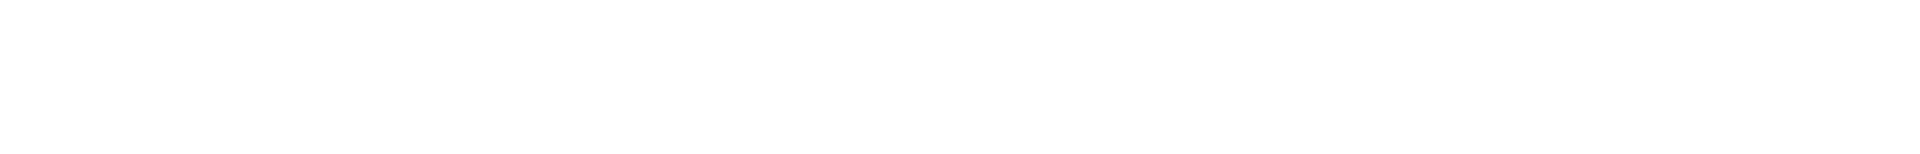 i-SPEED 7 Series logo.